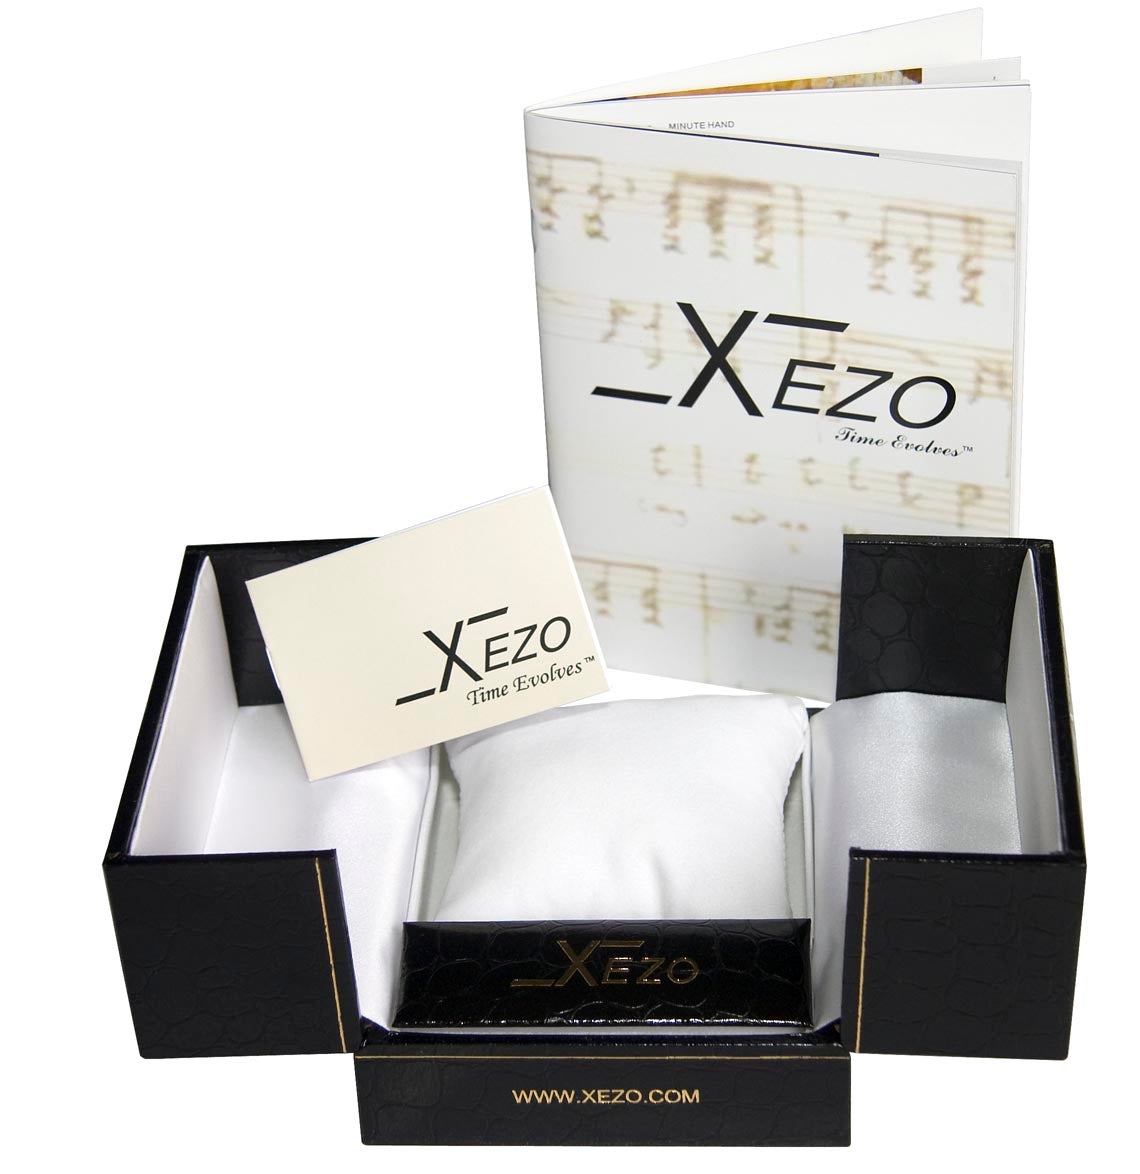 Xezo - Black gift box, certificate and manual of the Architect 2001B Tank watch